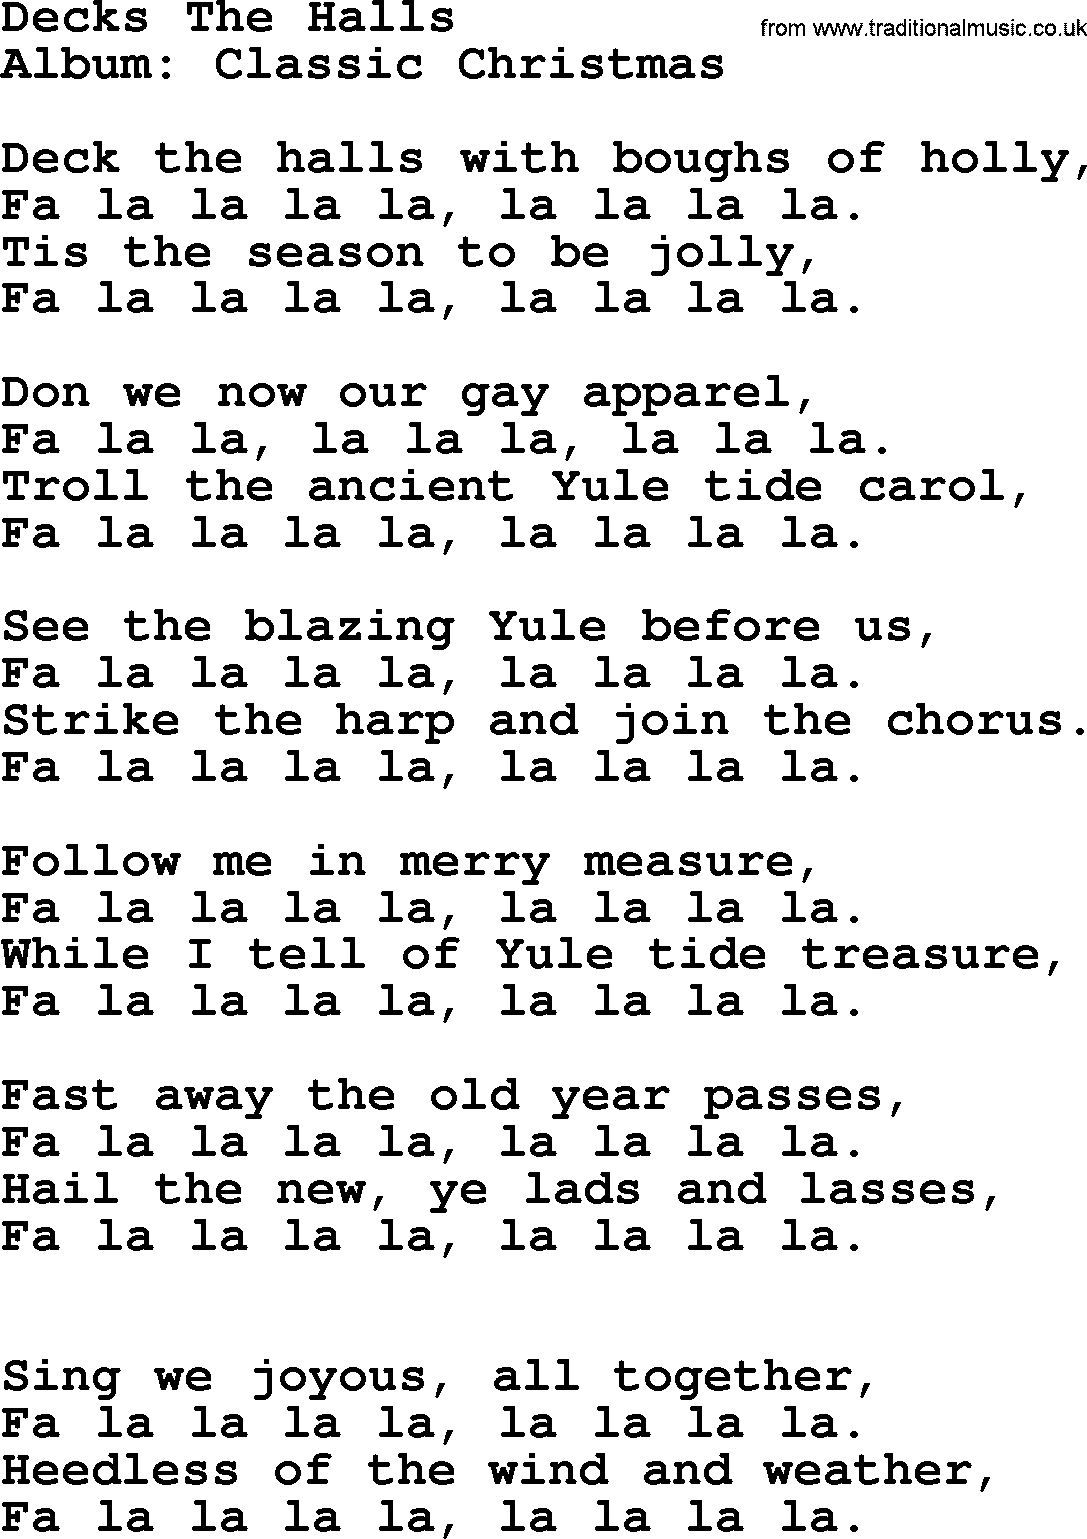 George Strait song: Decks The Halls, lyrics